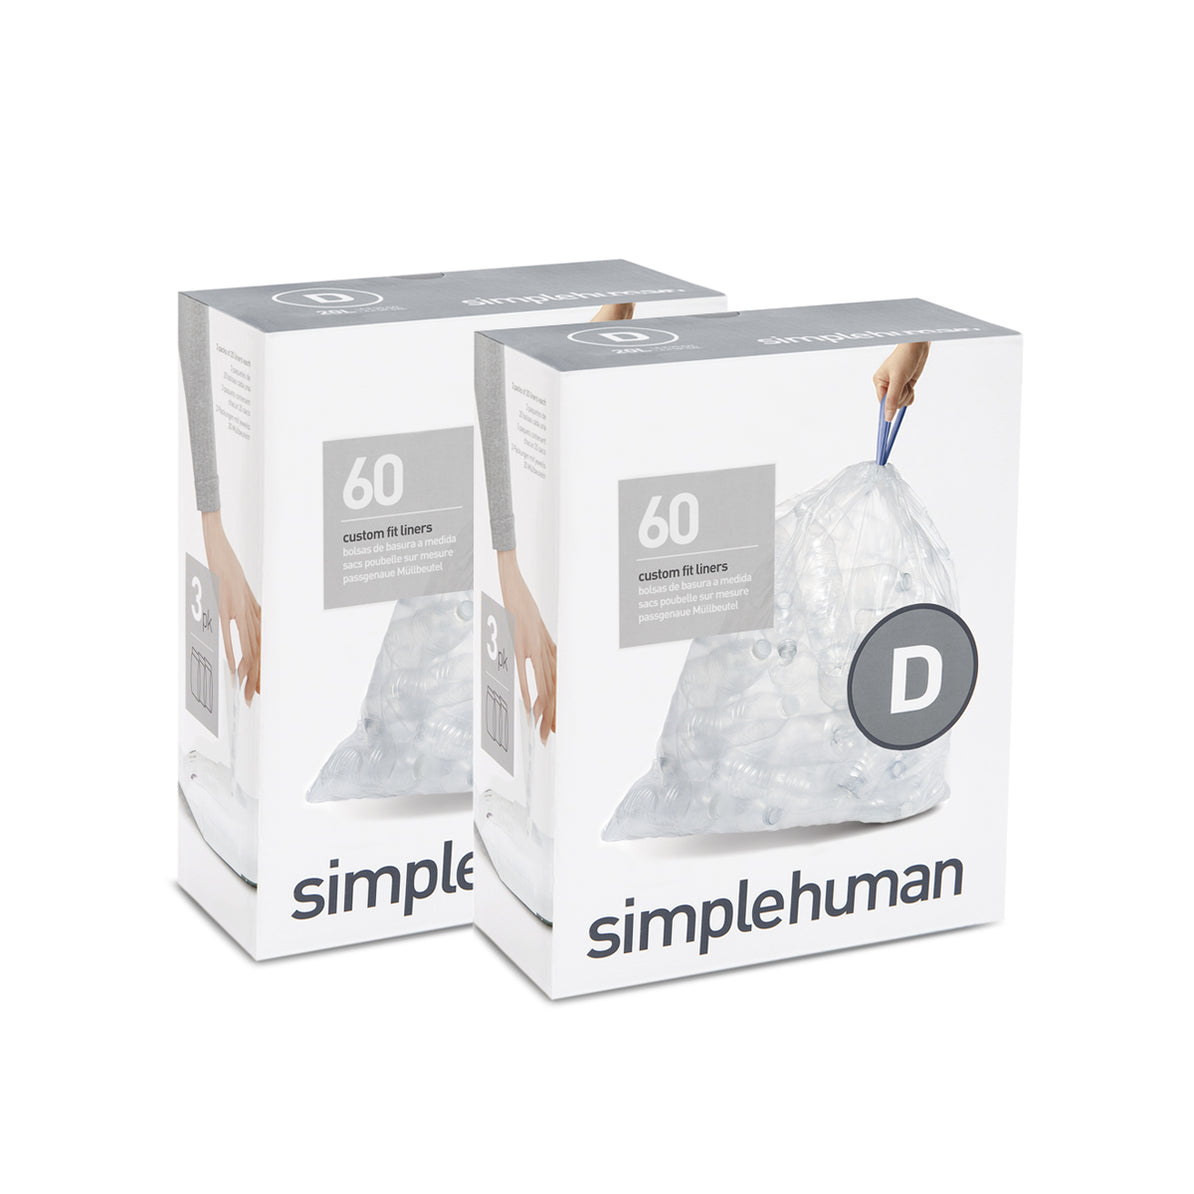 simplehuman code D custom fit liners